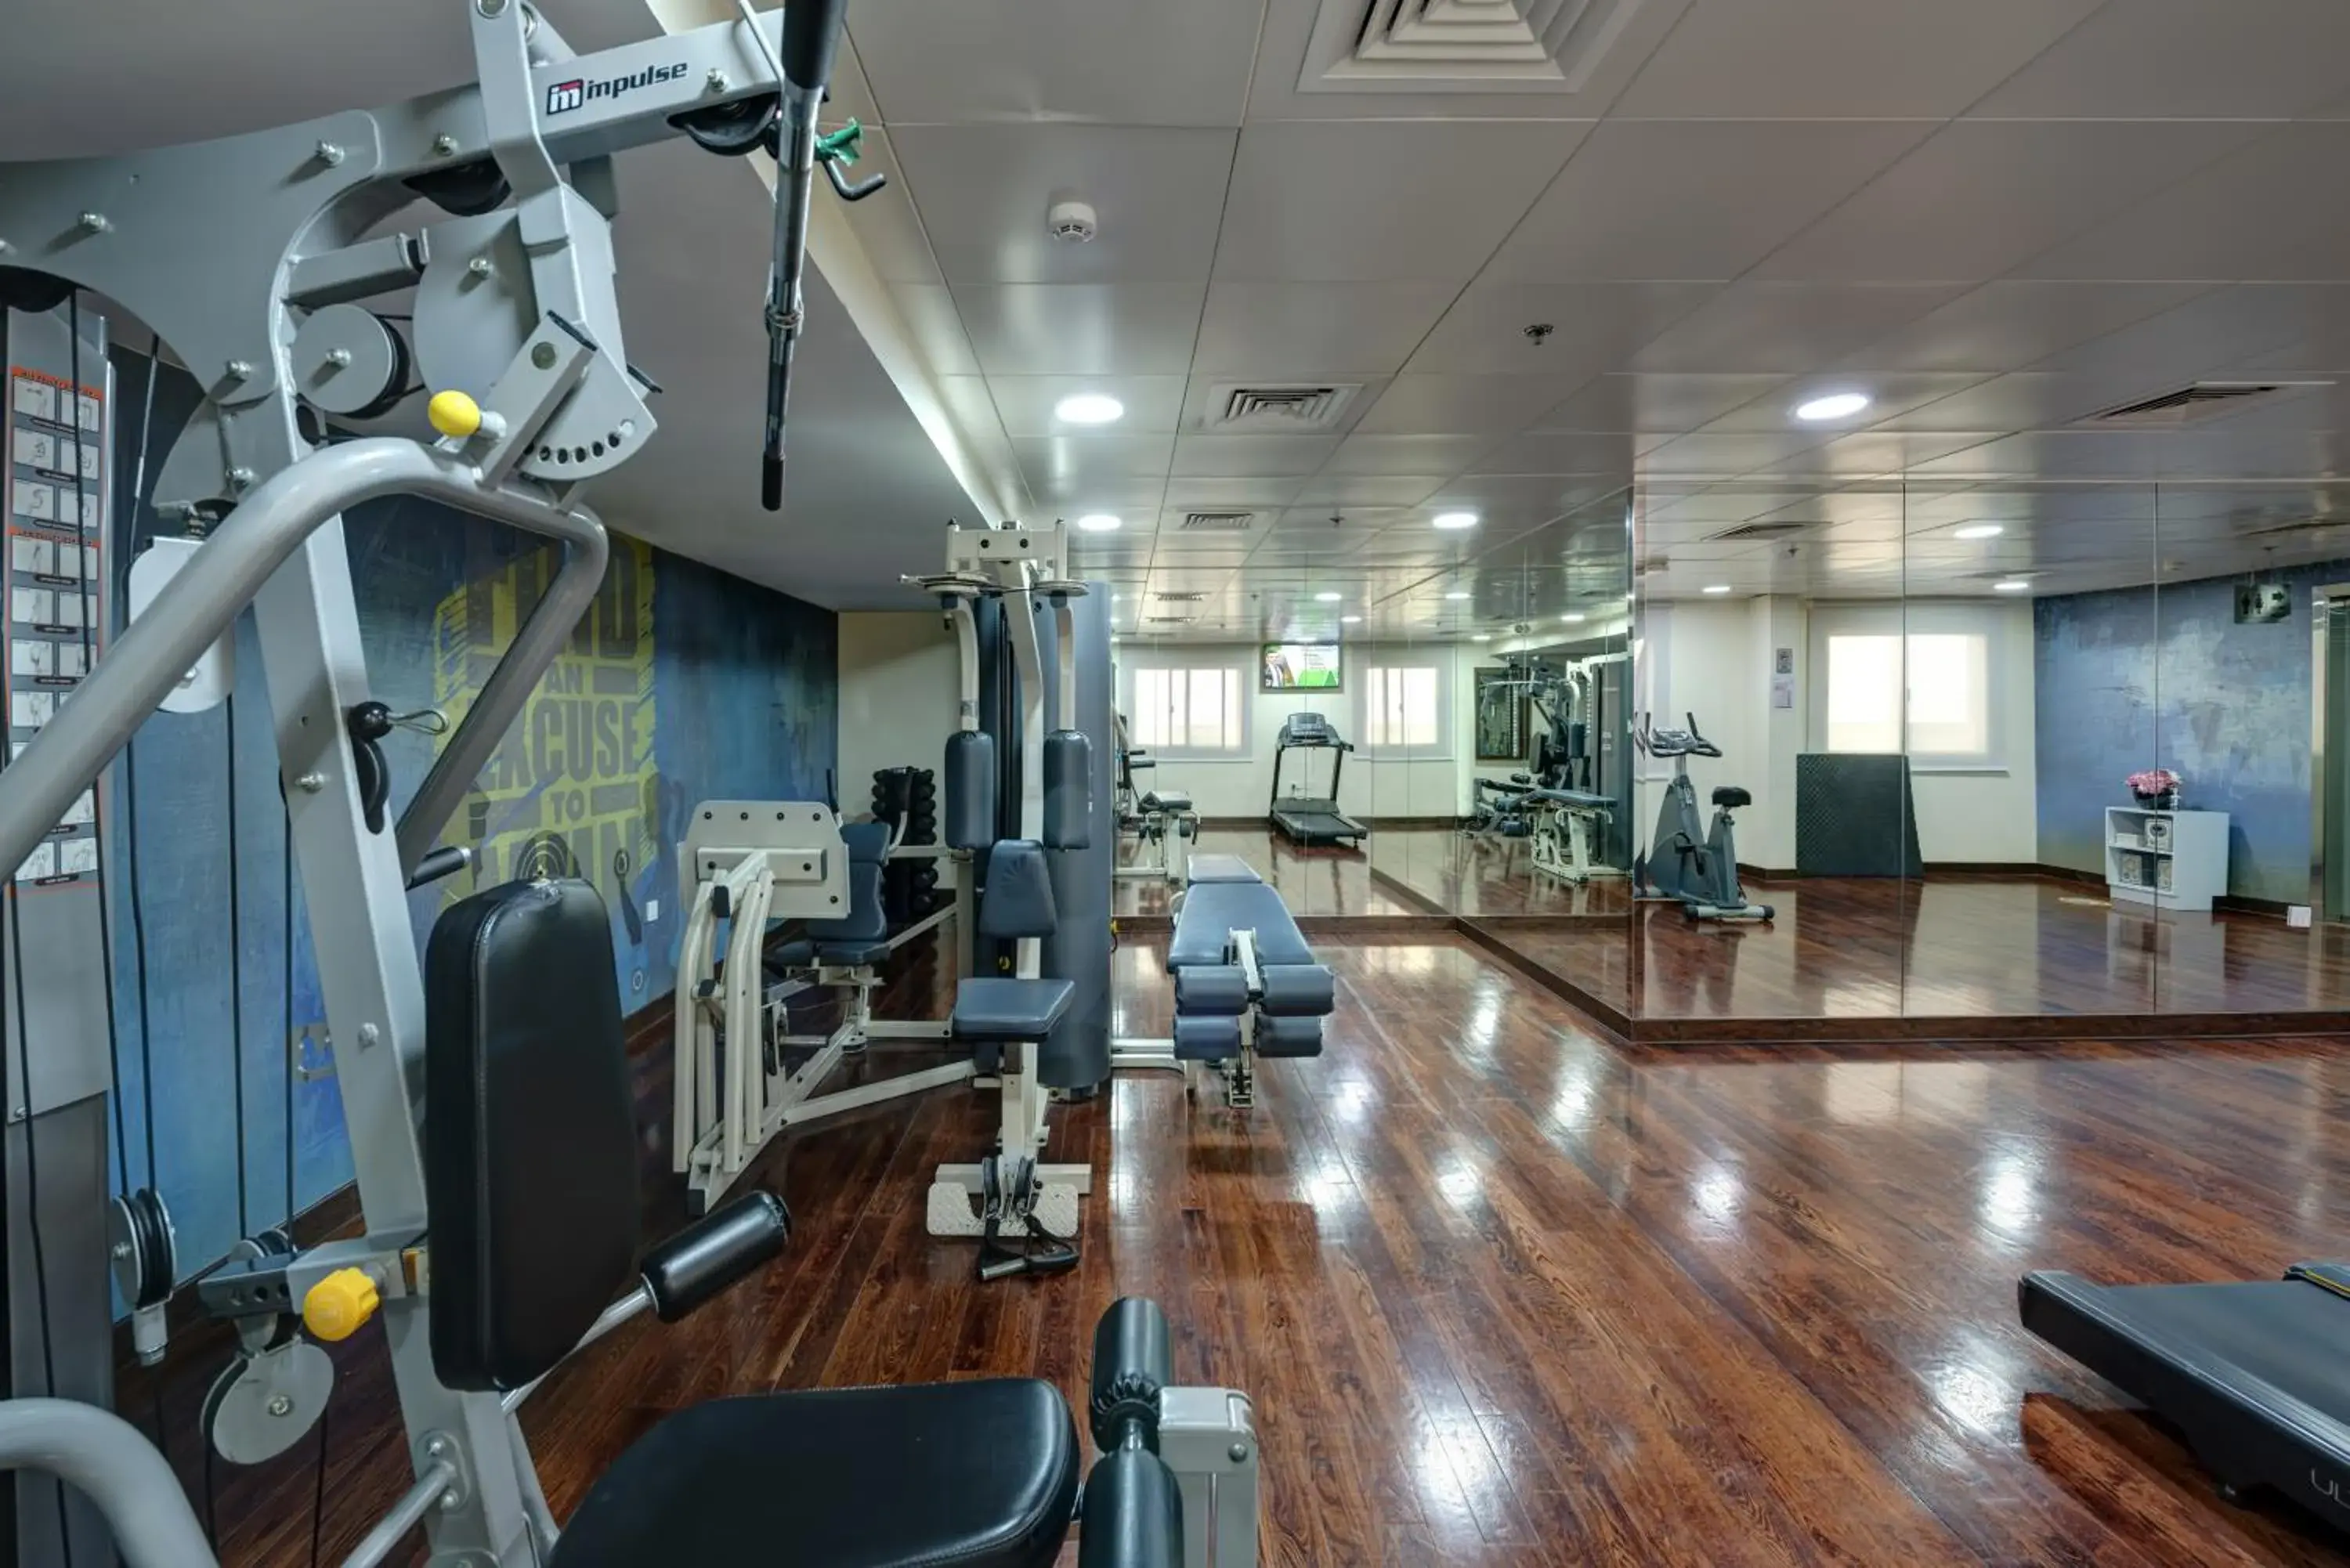 Fitness centre/facilities, Fitness Center/Facilities in Radiance Premium Suites